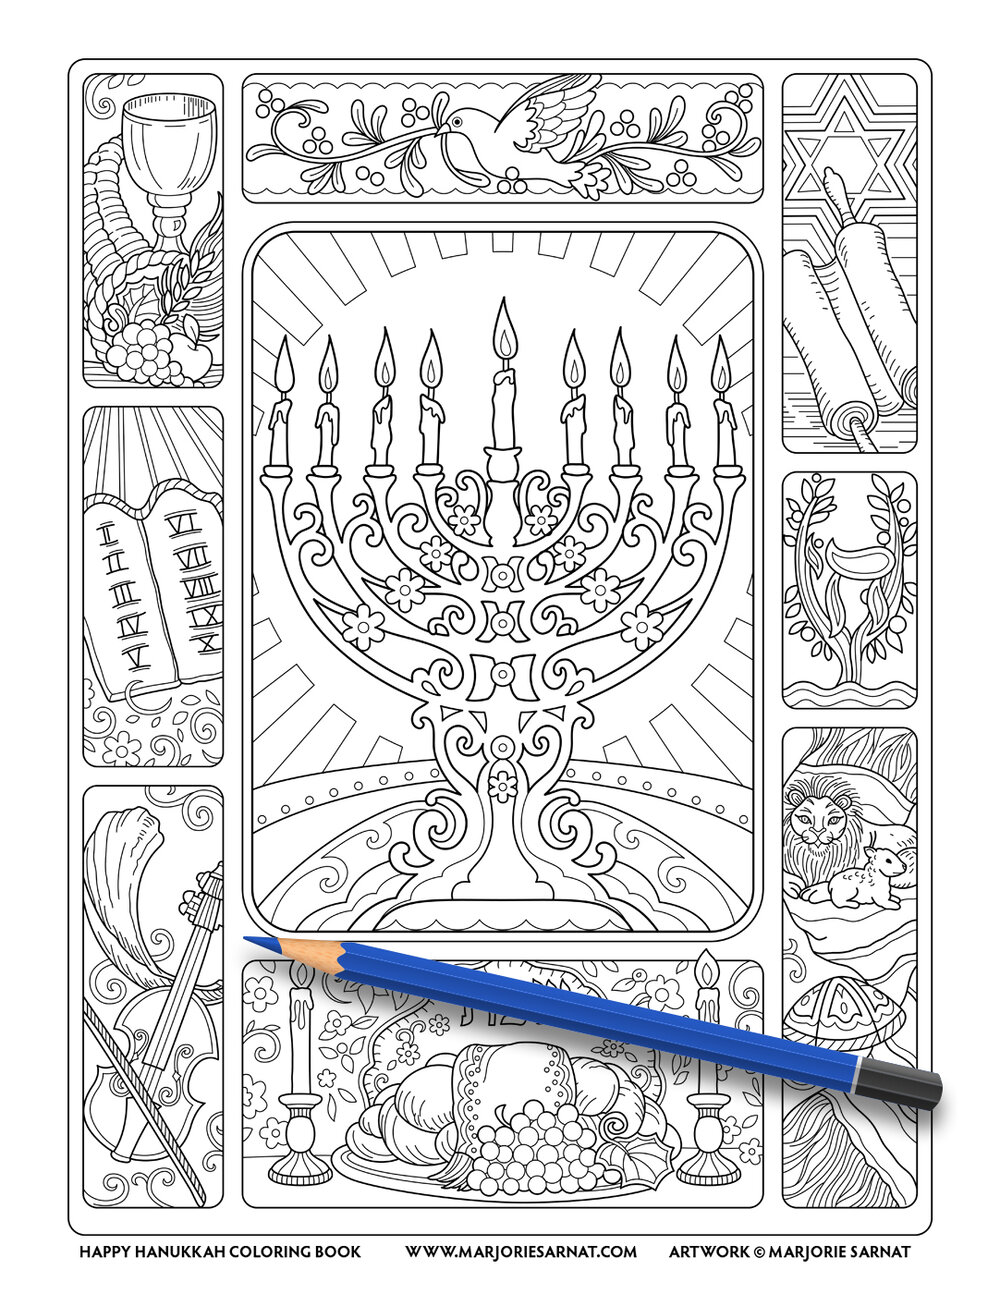 Happy hanukkah â marjorie sarnat design illustration